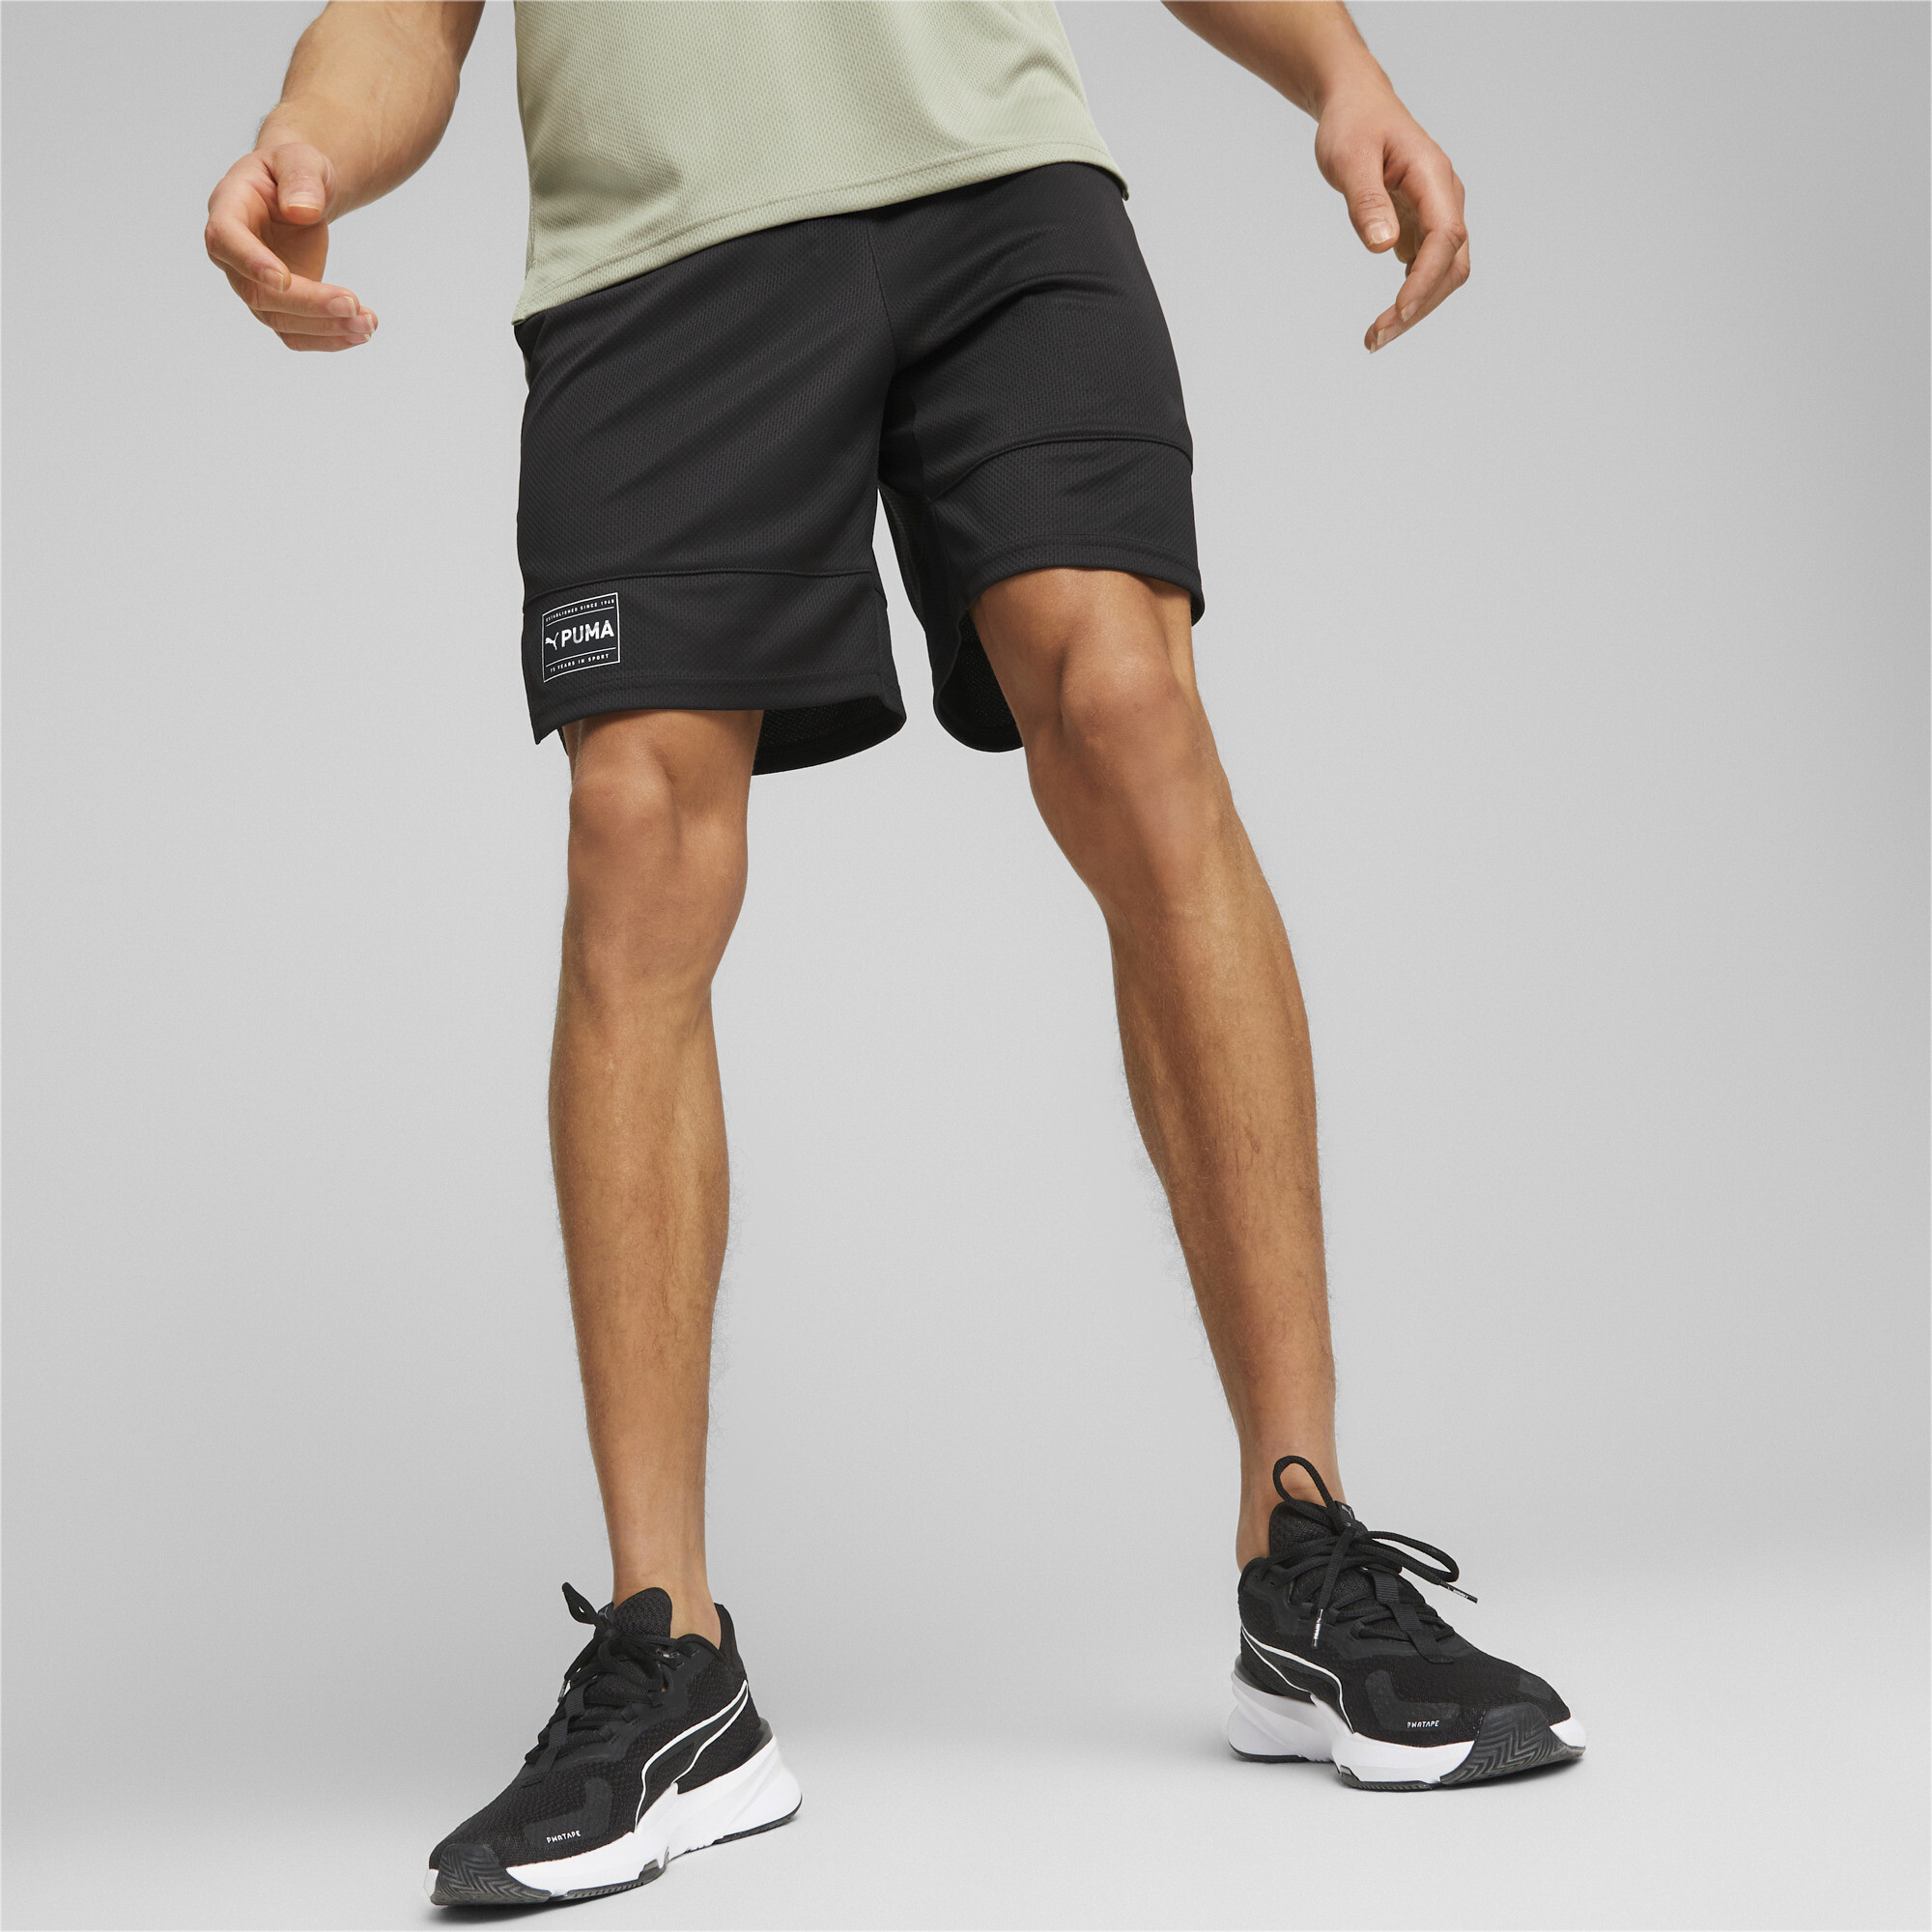 Men's PUMA Fit Ultrabreathe Training Shorts Men In Black, Size XL